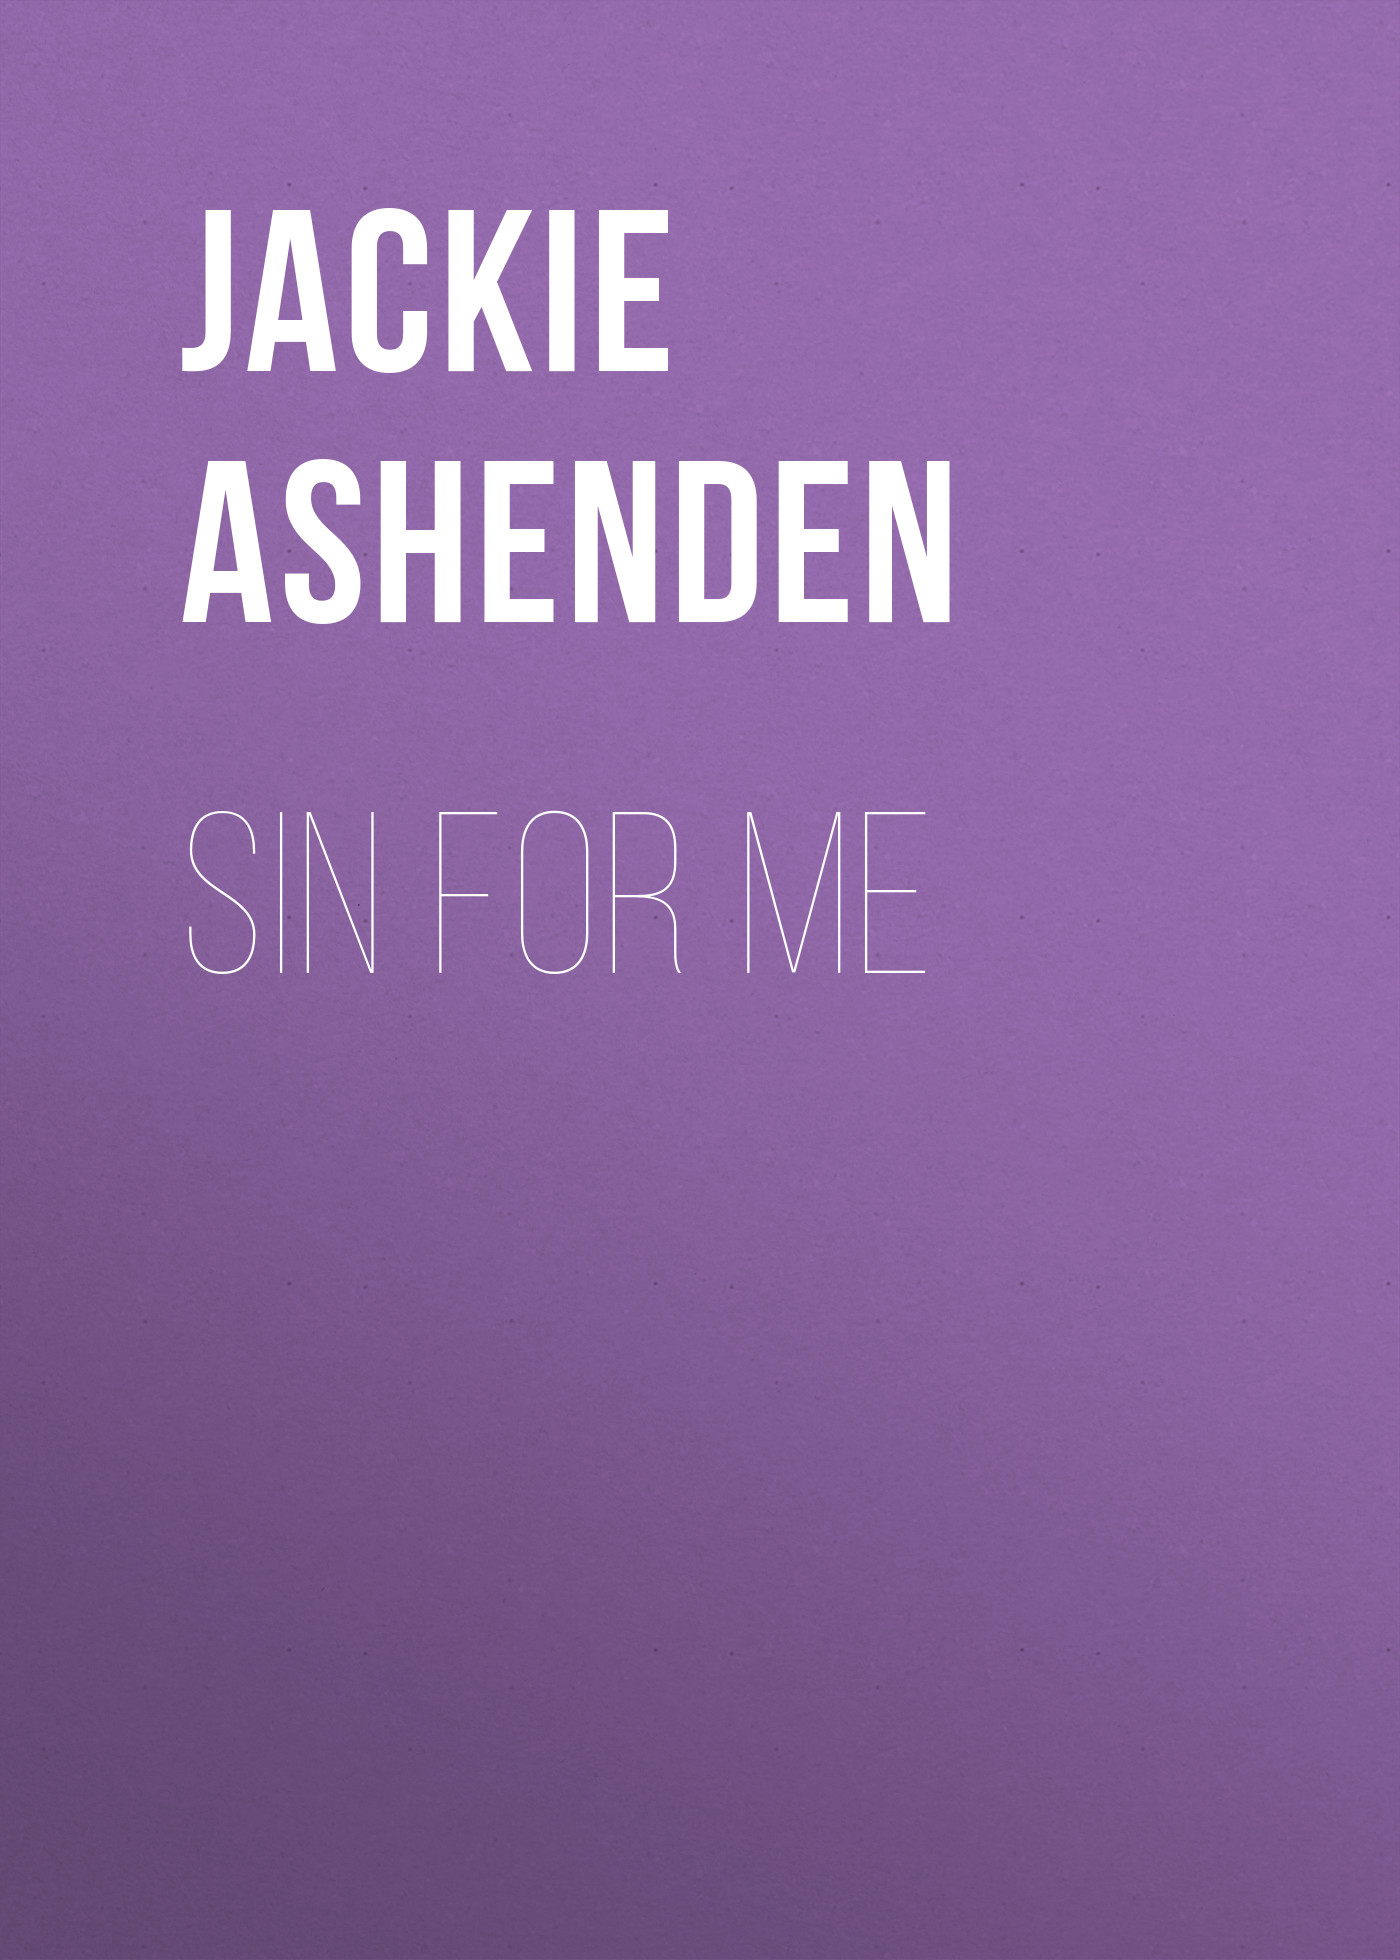 Скачать Sin For Me - Jackie Ashenden